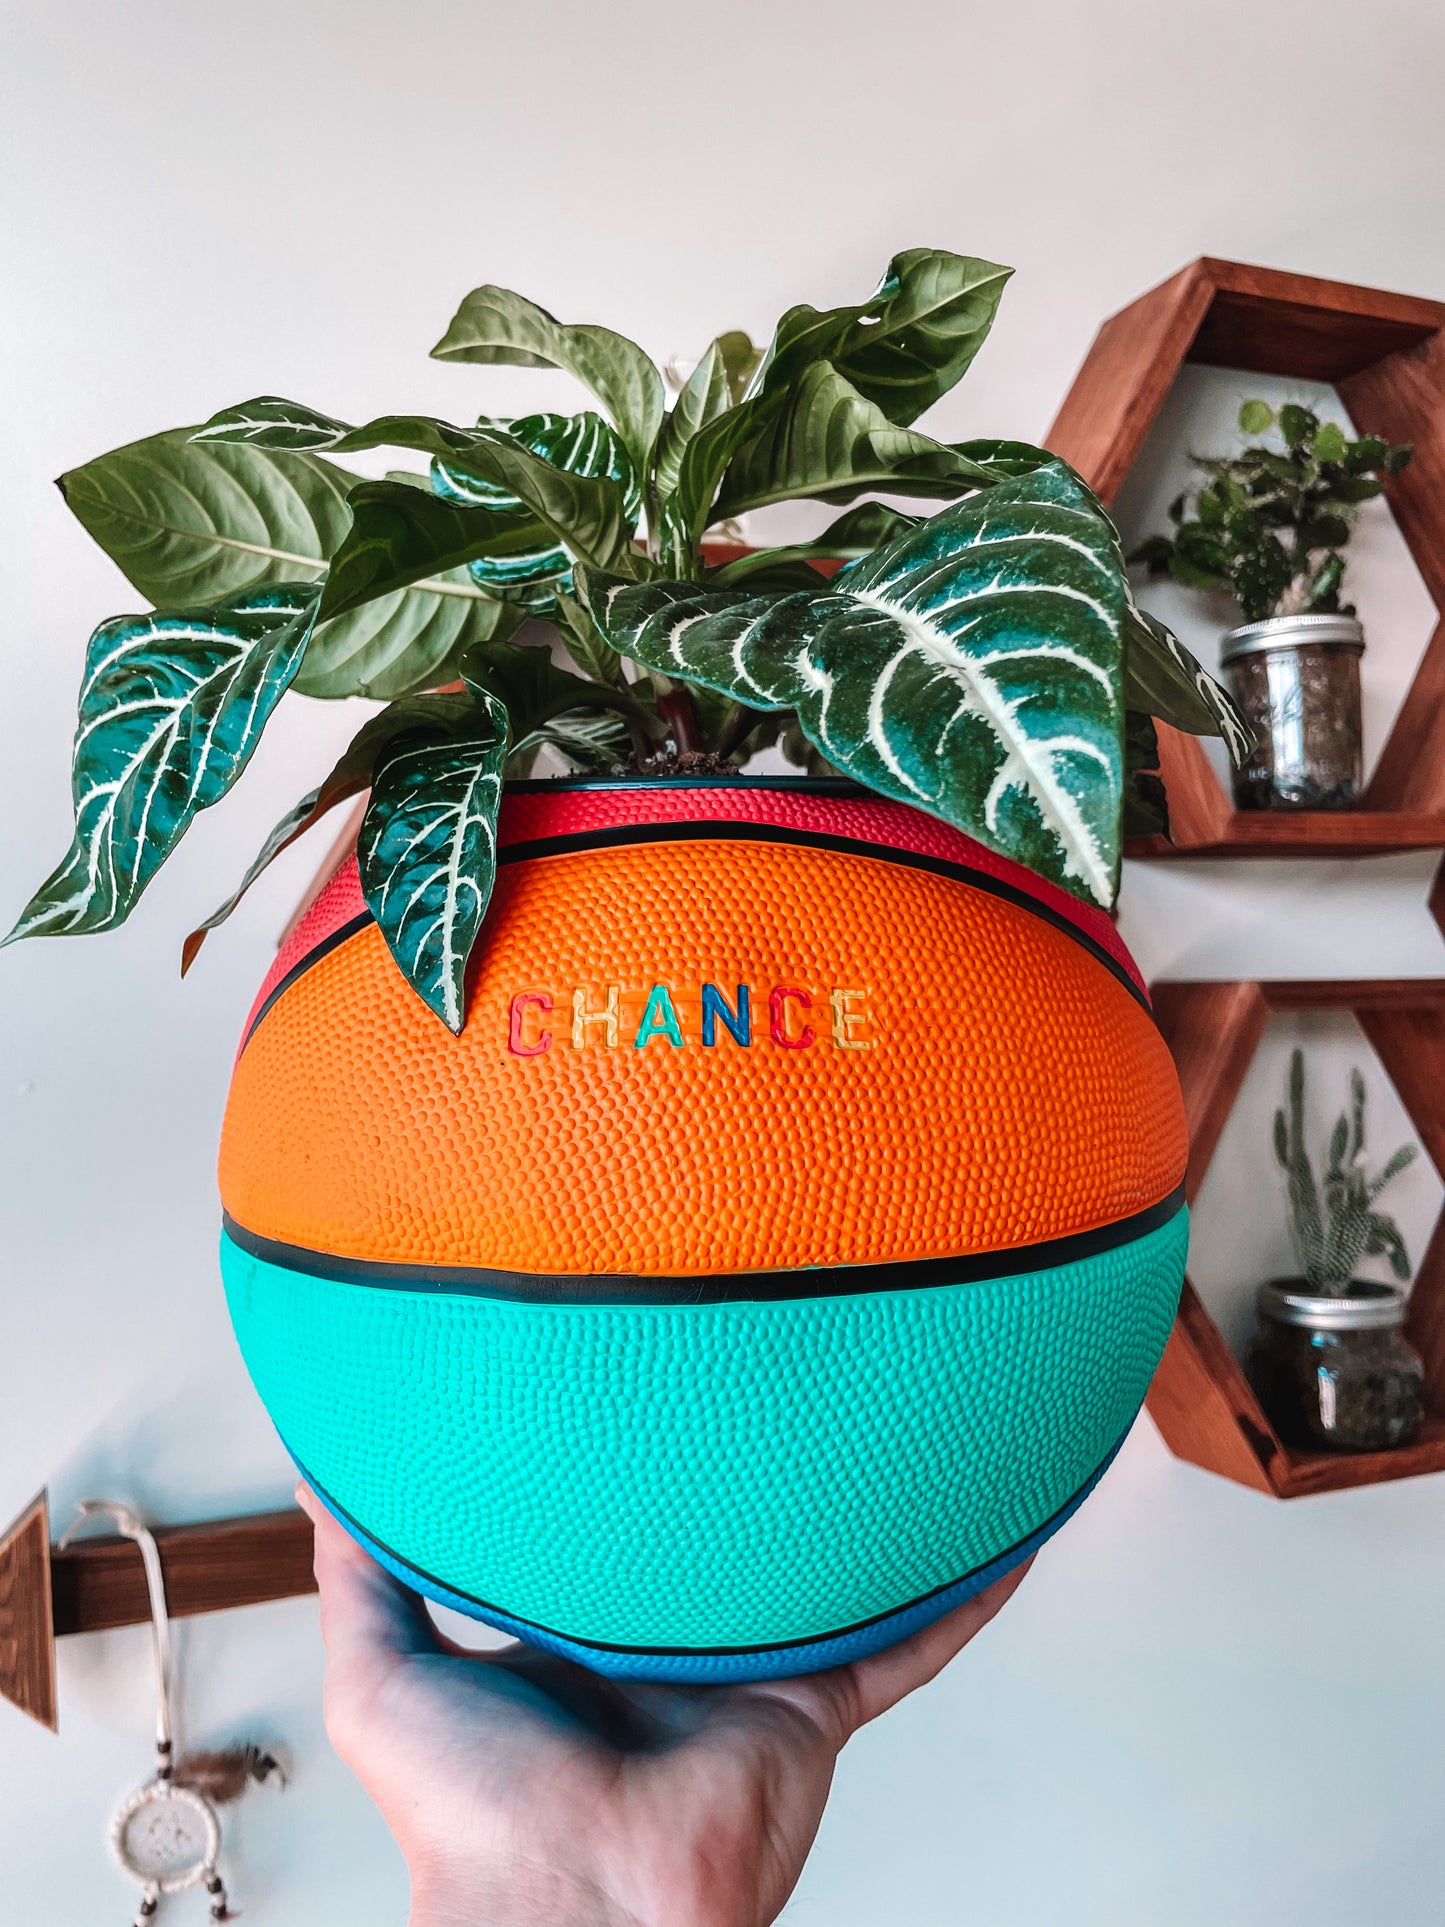 CHANCE “Juicy” Basketball Planter